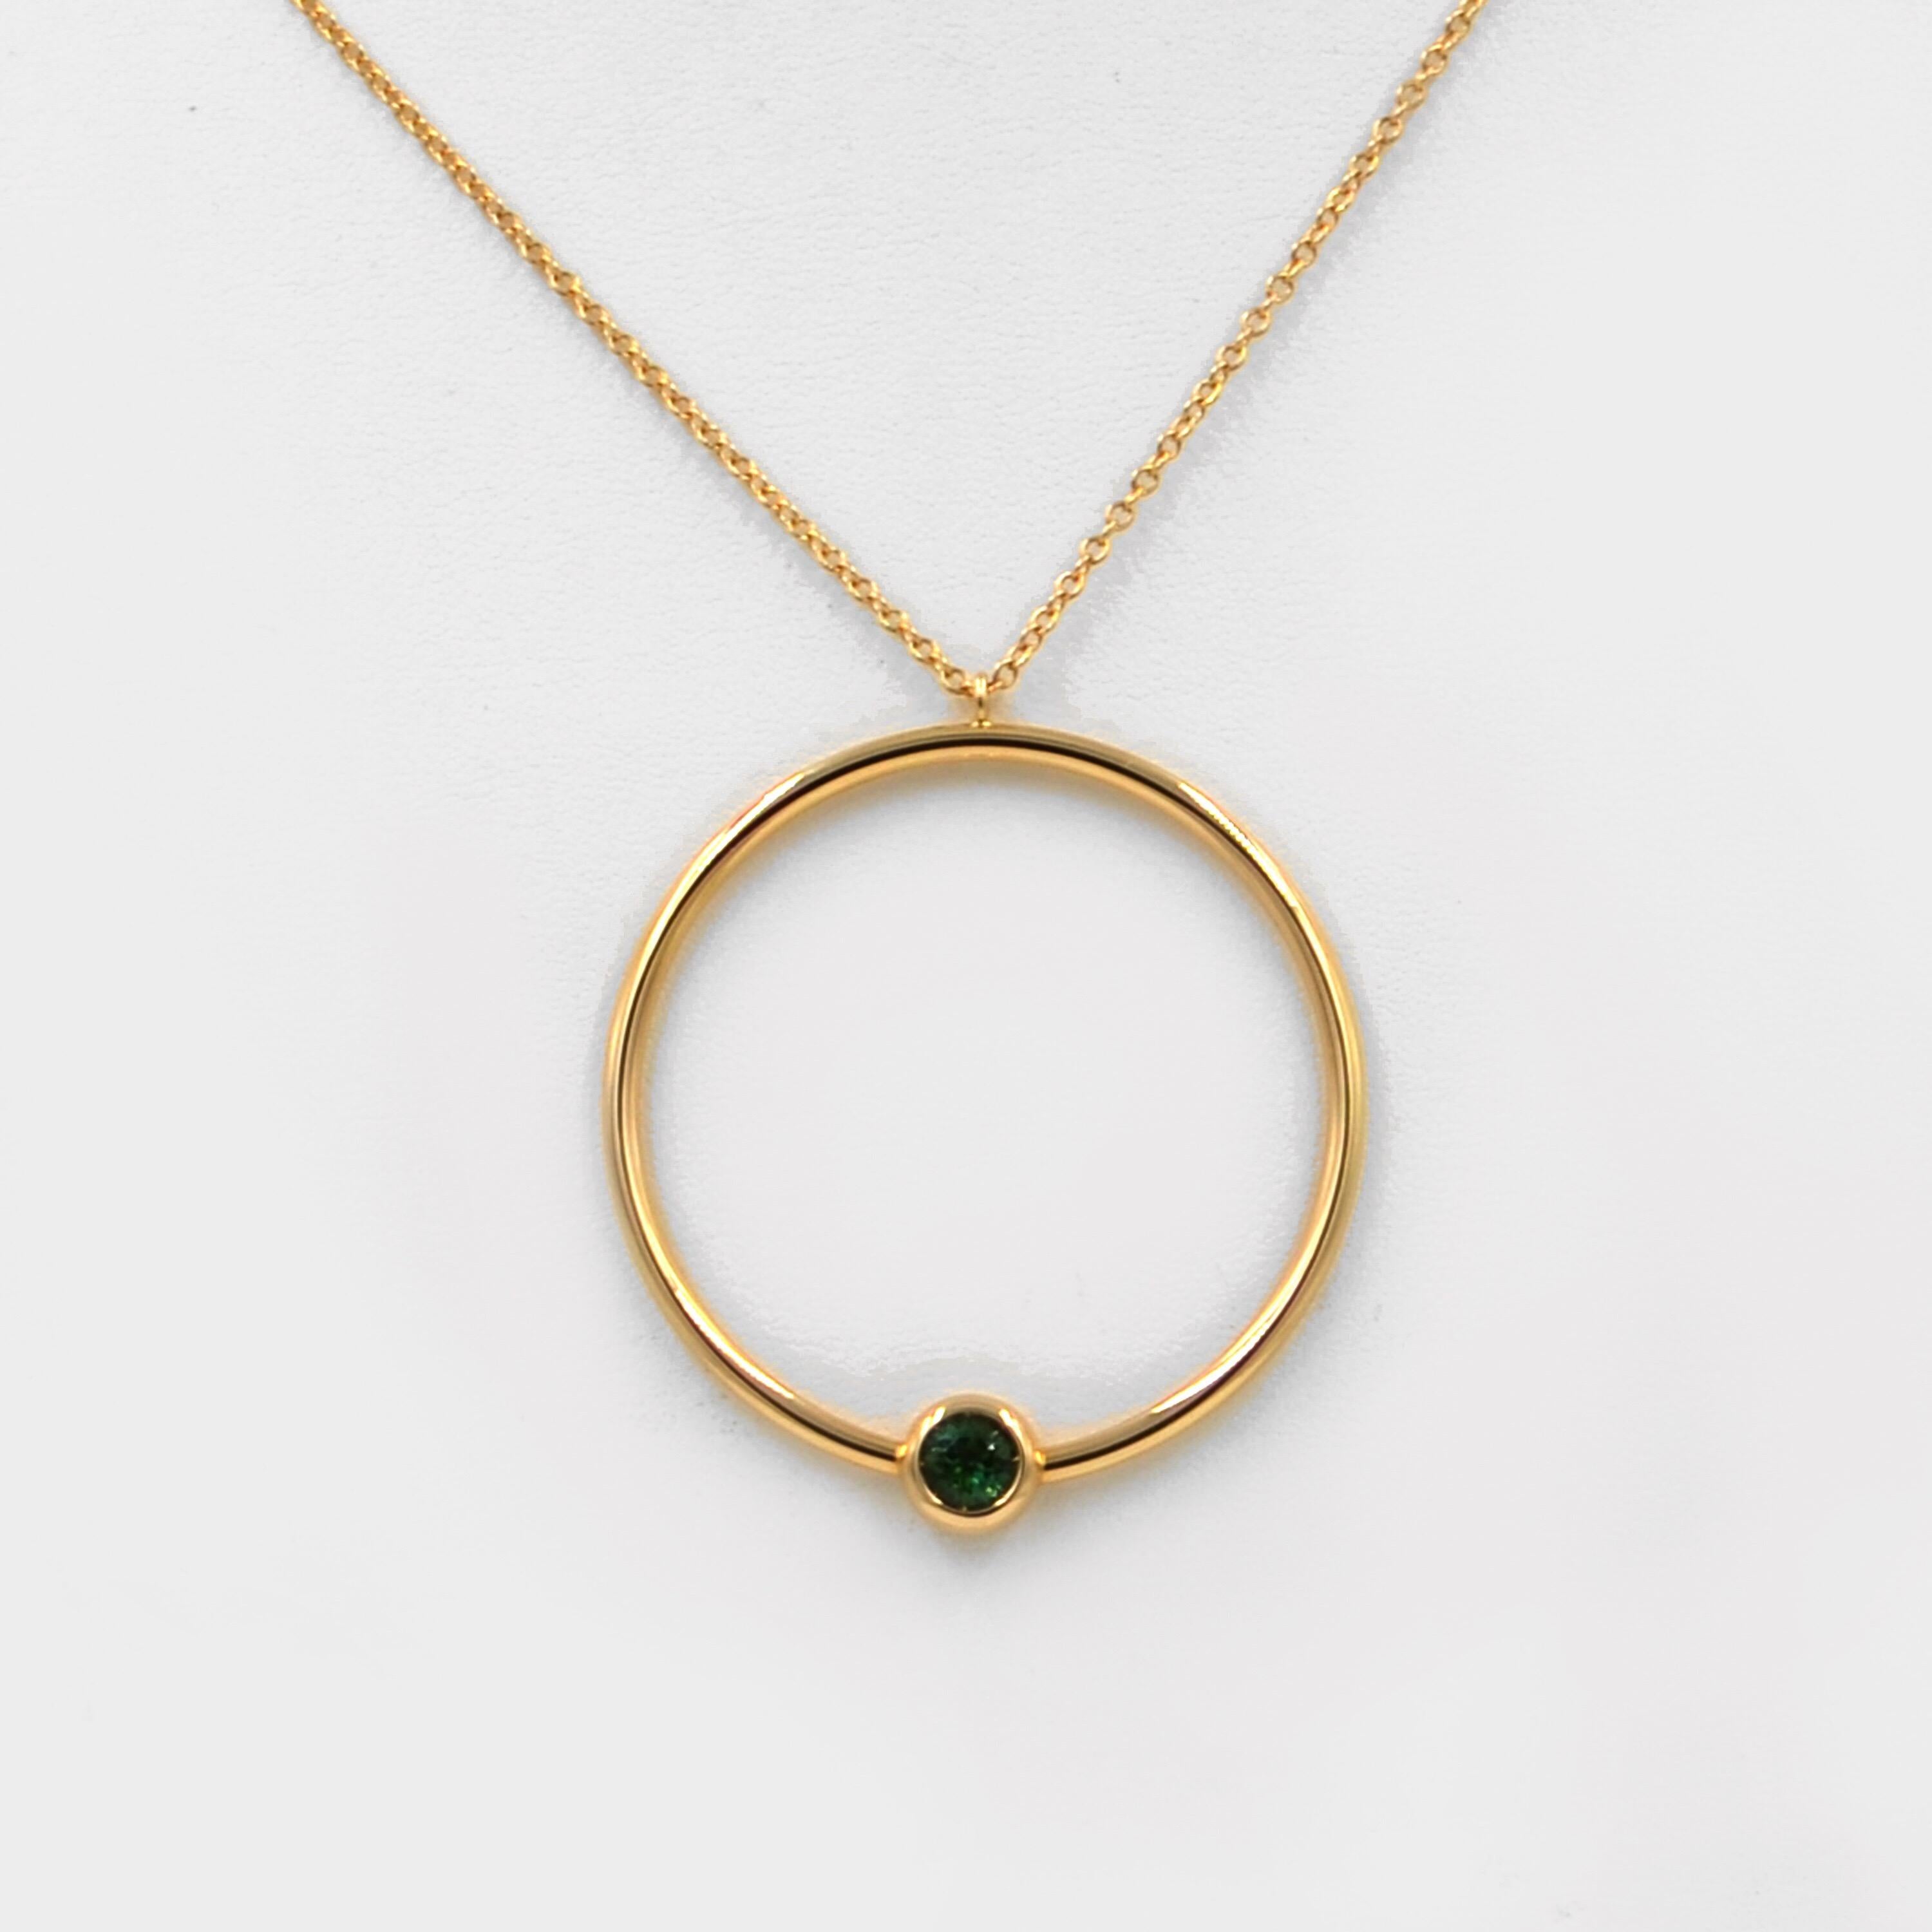 18kt Yellow Gold Green Tourmaline GARAVELLI Long Necklace
Chain lenght cm 65
Circle pendant diameter cm 45
18kt gold gr 12,06
Round Green Tourmaline ct 0,73